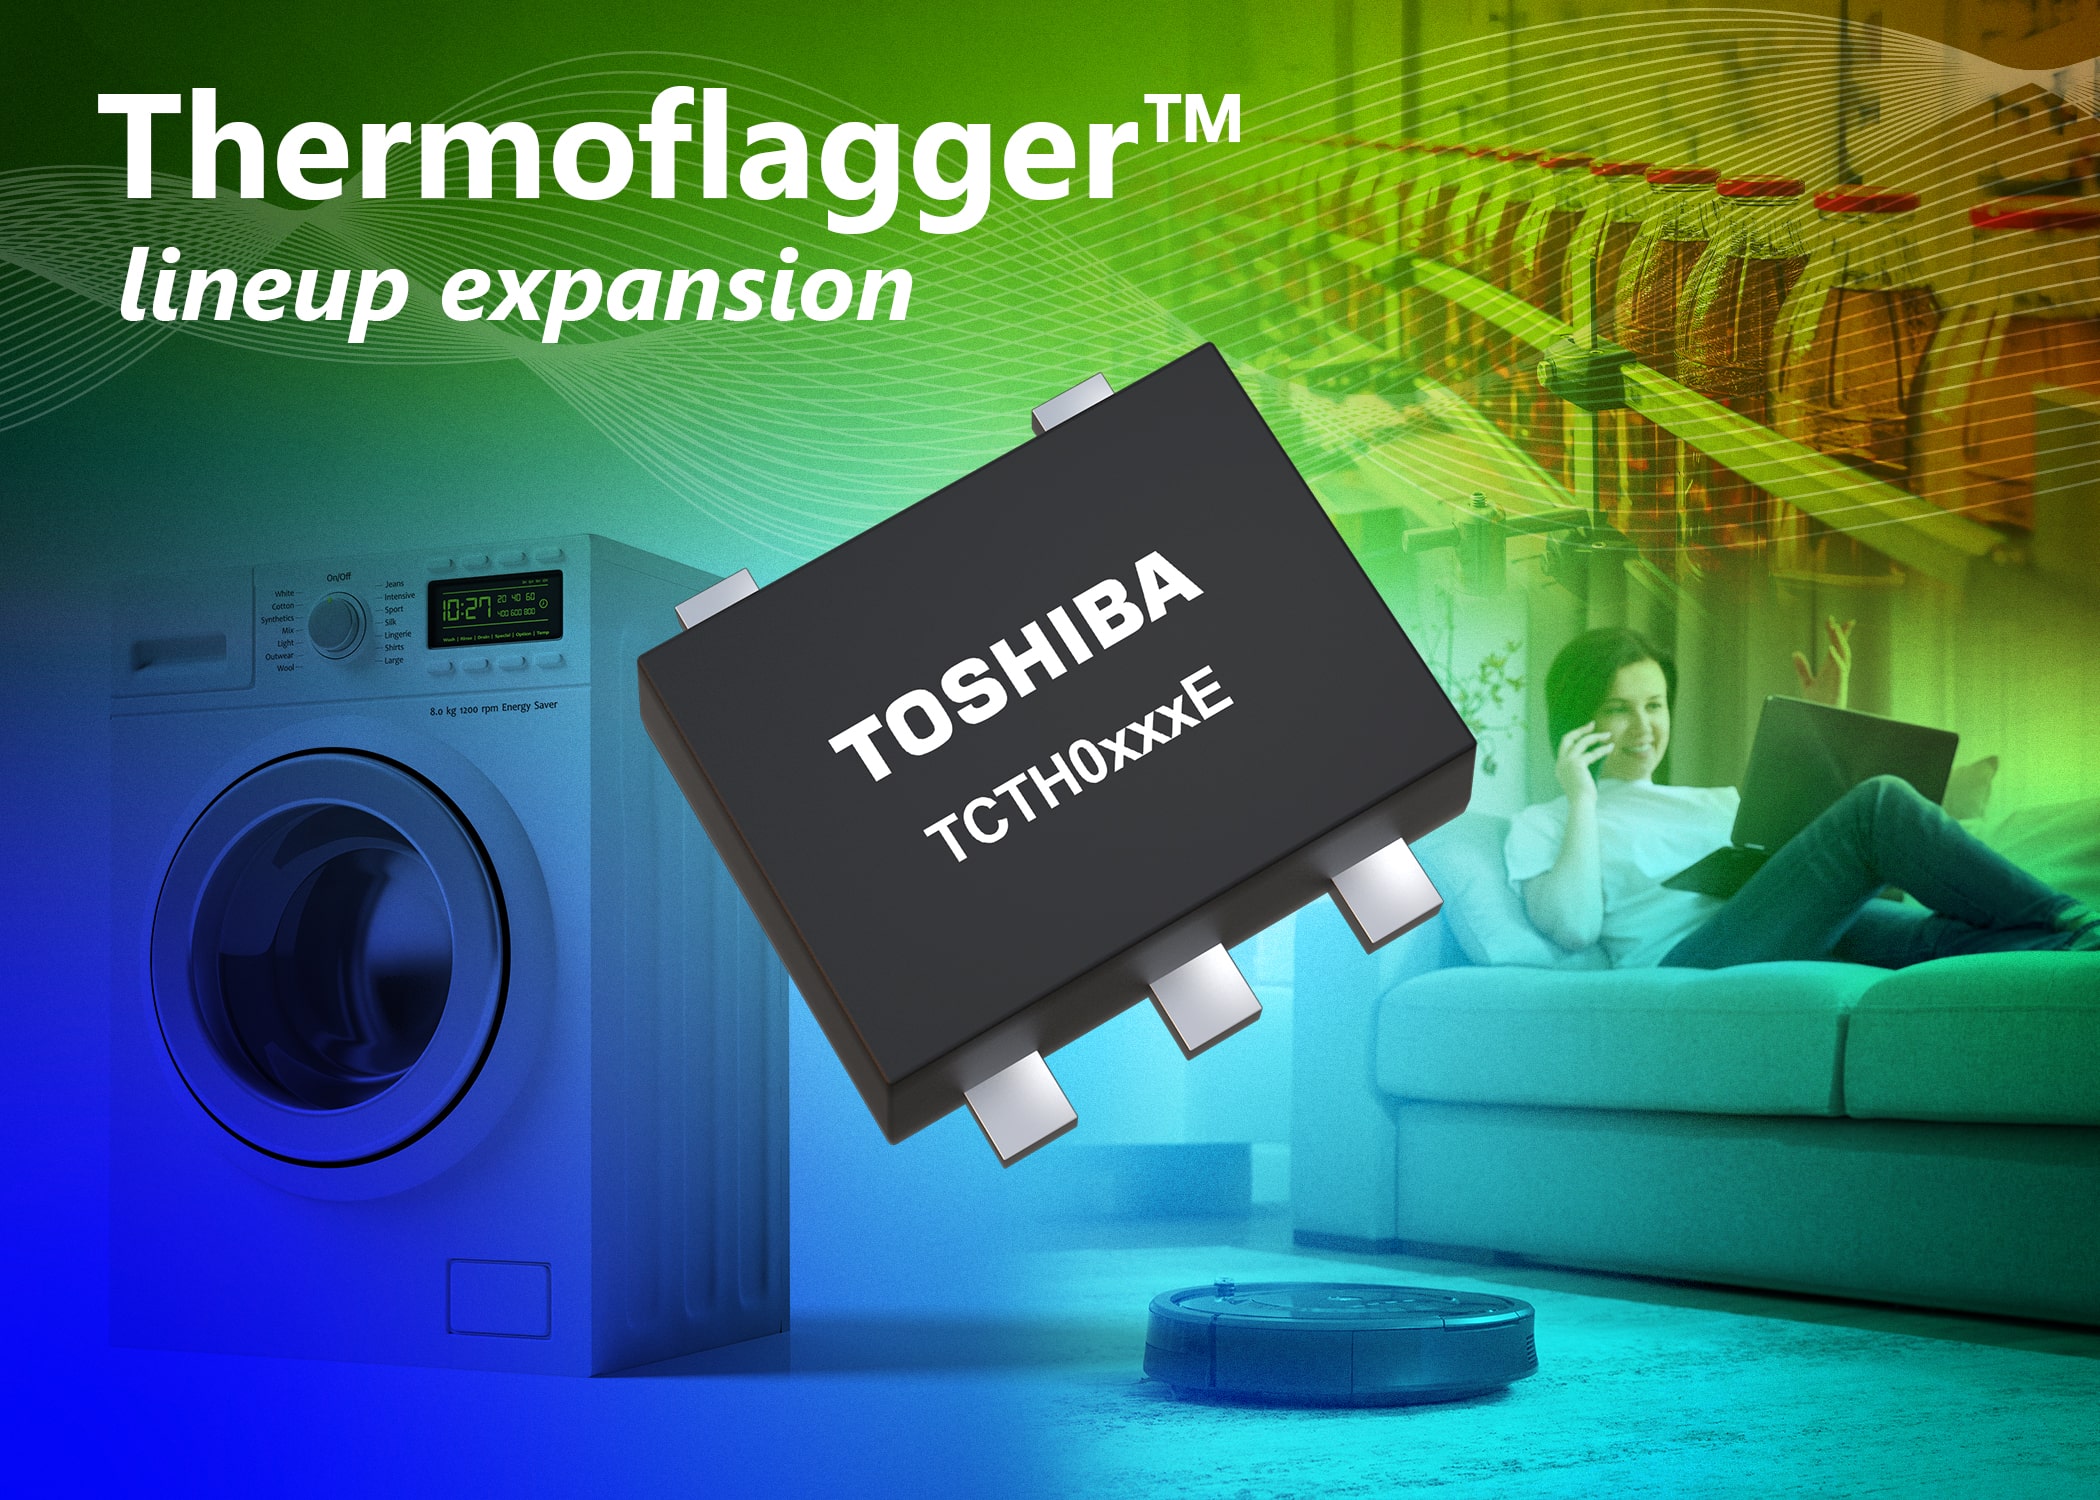 Toshiba Expands Range of Thermoflagger Temperature Monitoring ICs